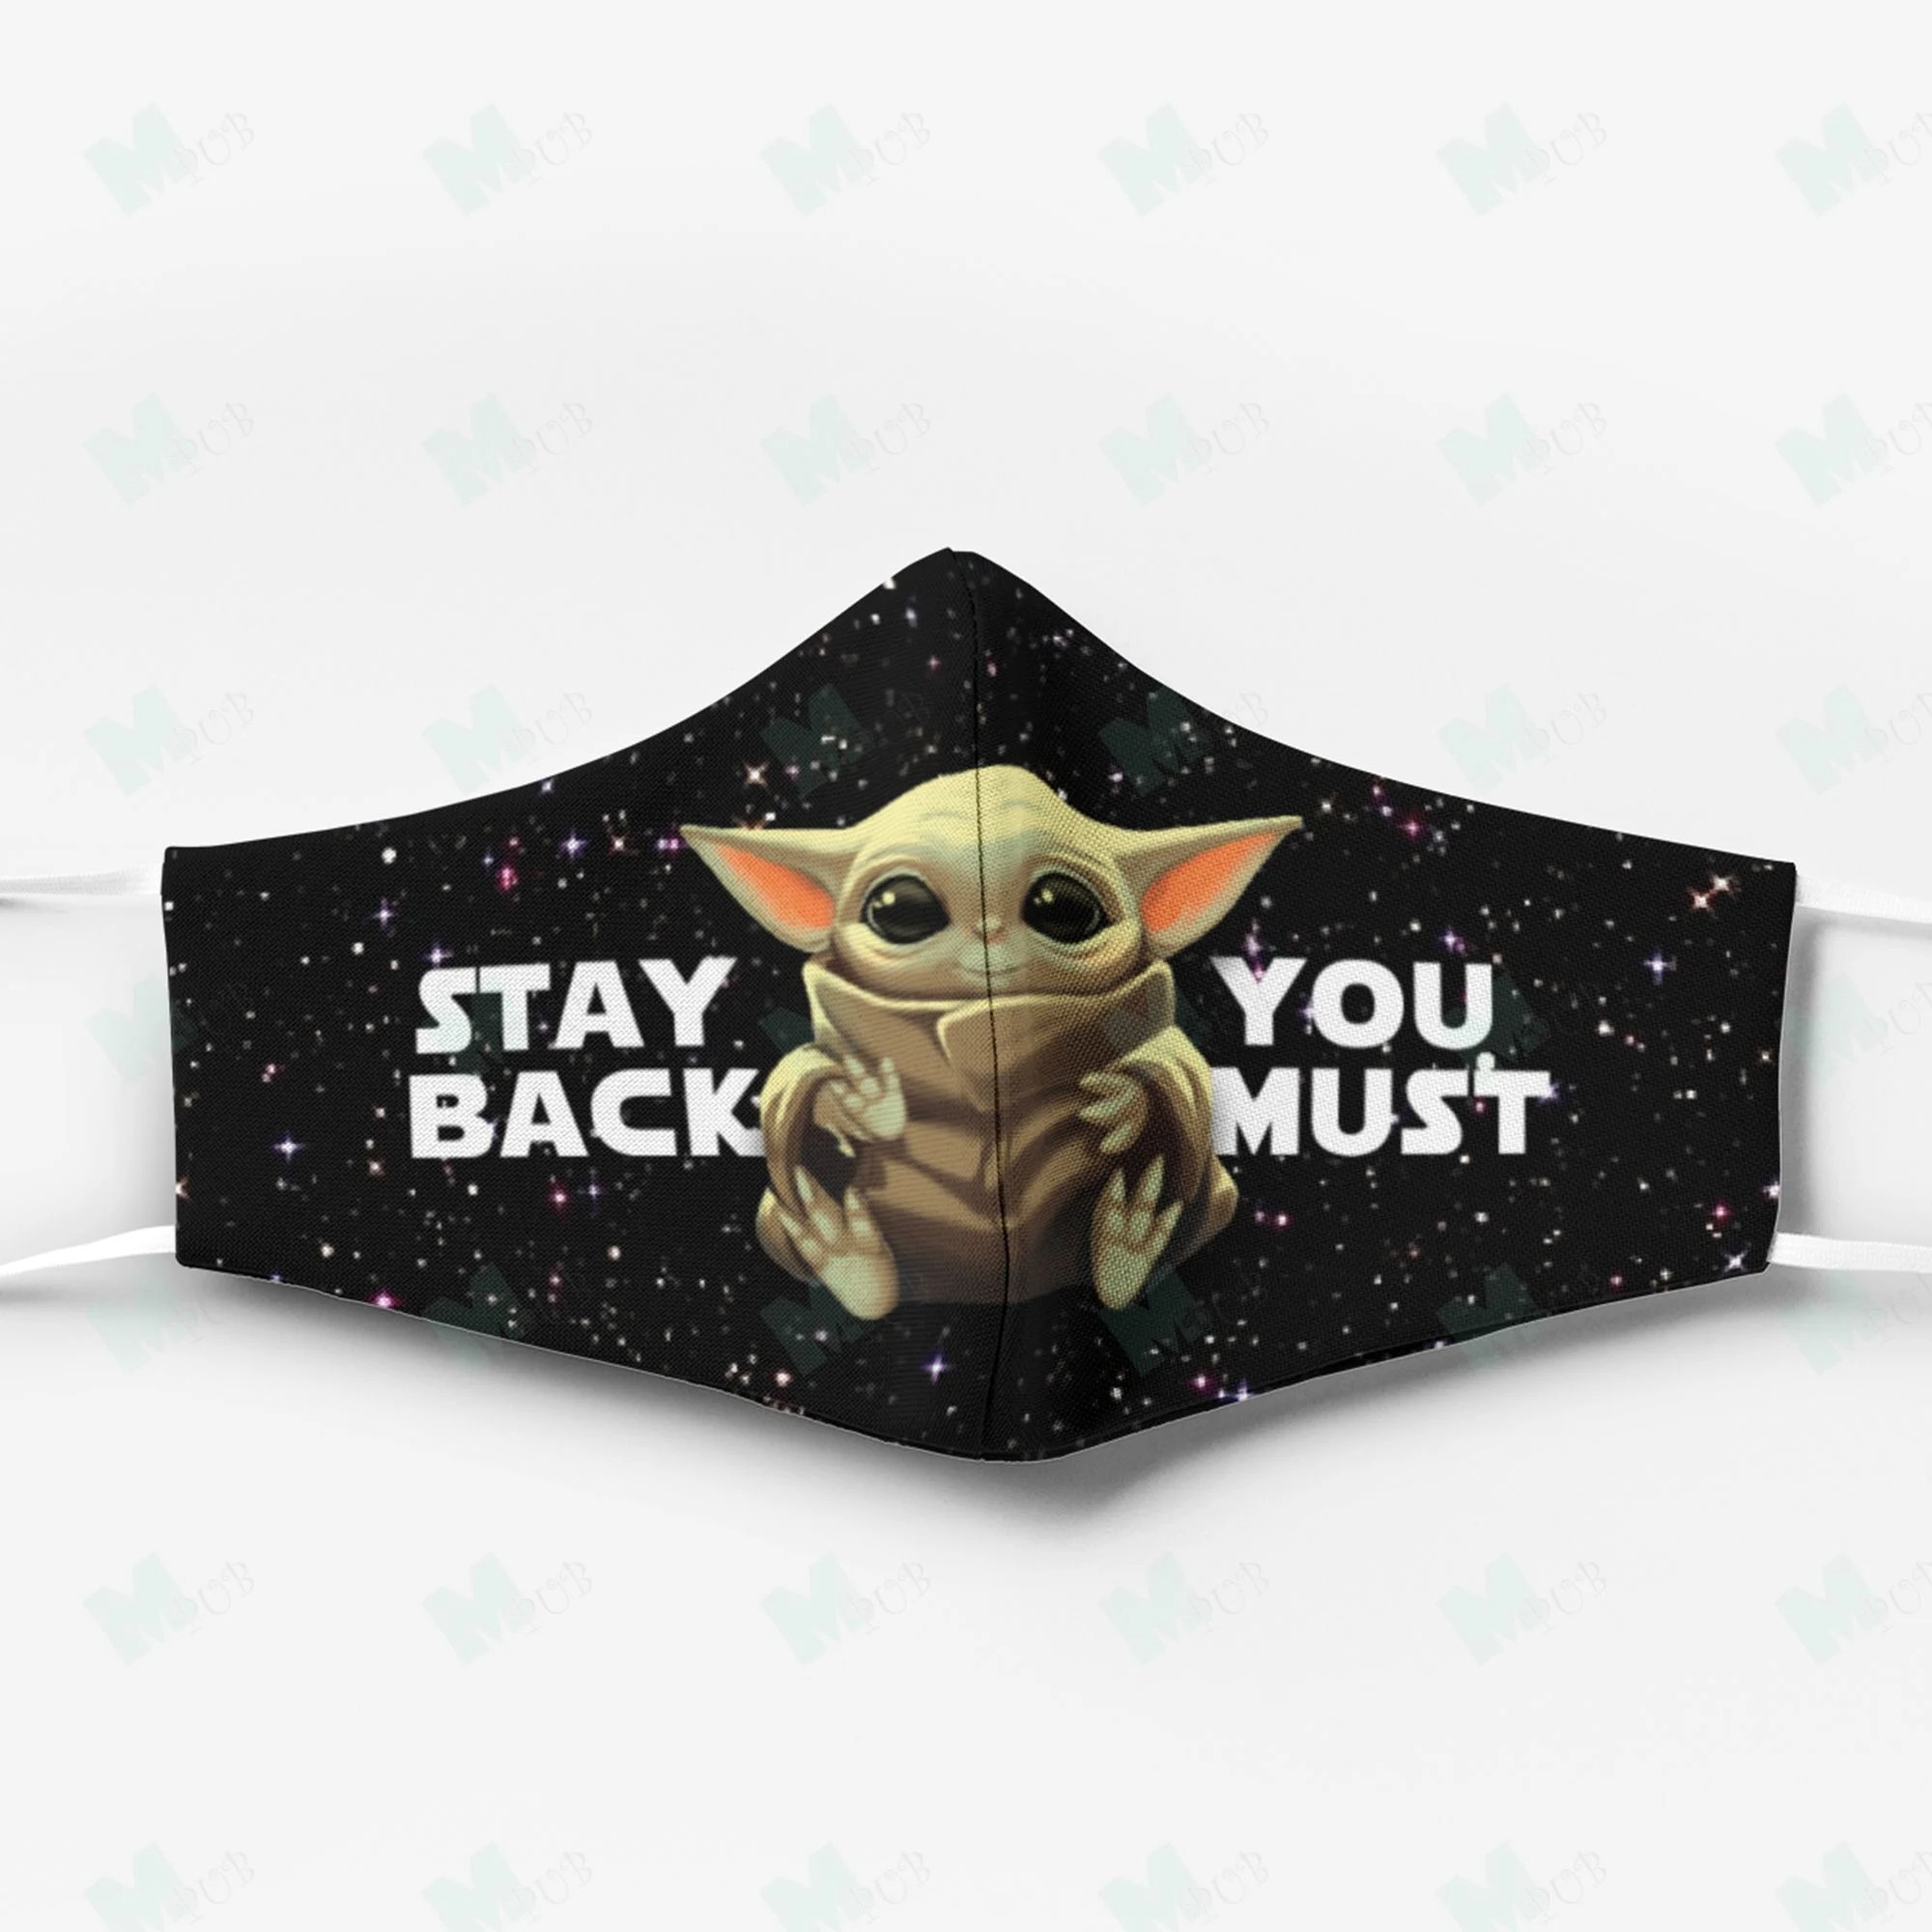 Stay Back You Must Yoda face mask